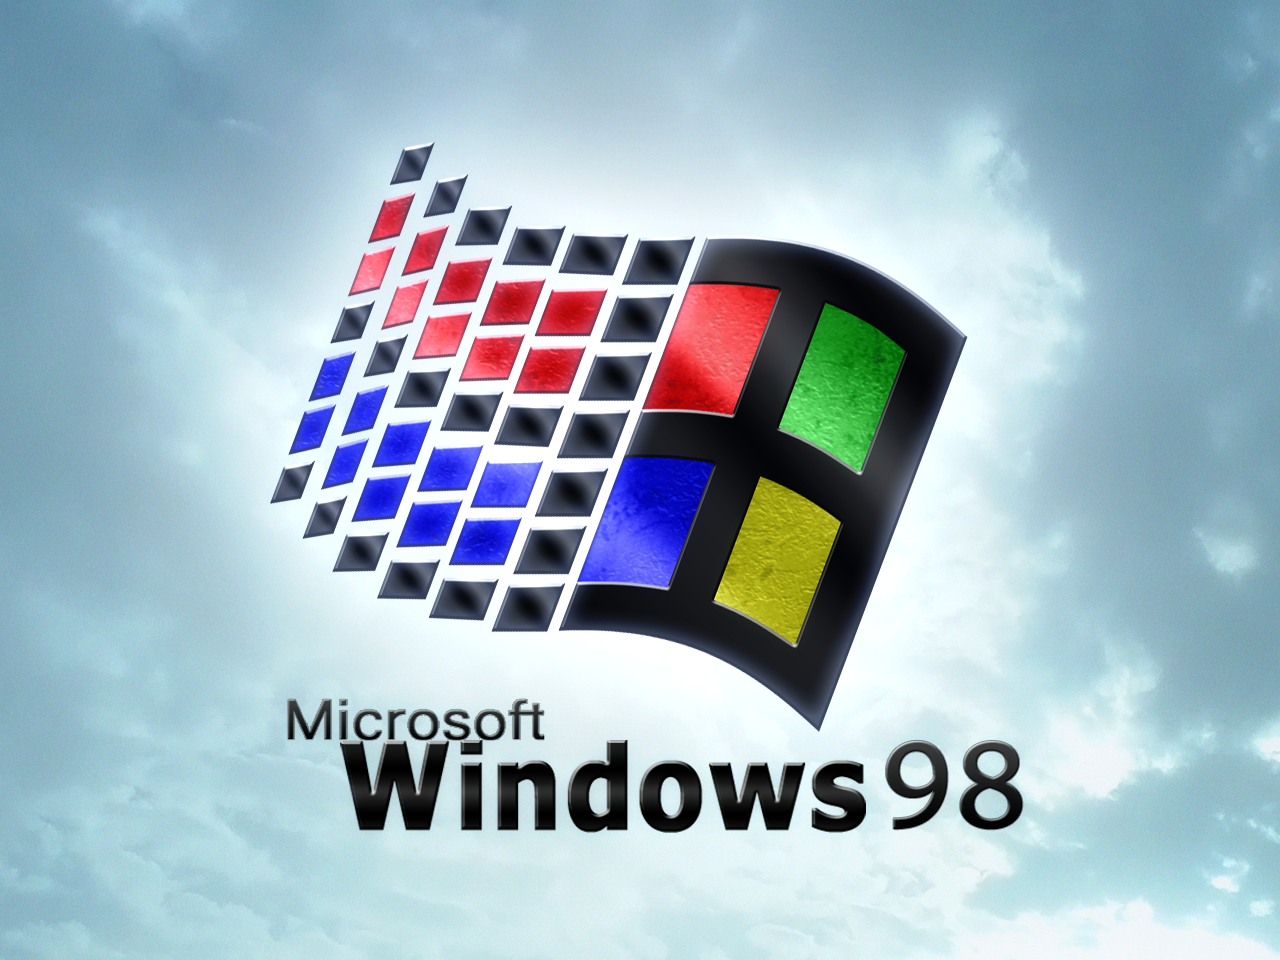 Windows 98 Wallpaper By Blueamnesiac On Deviantart